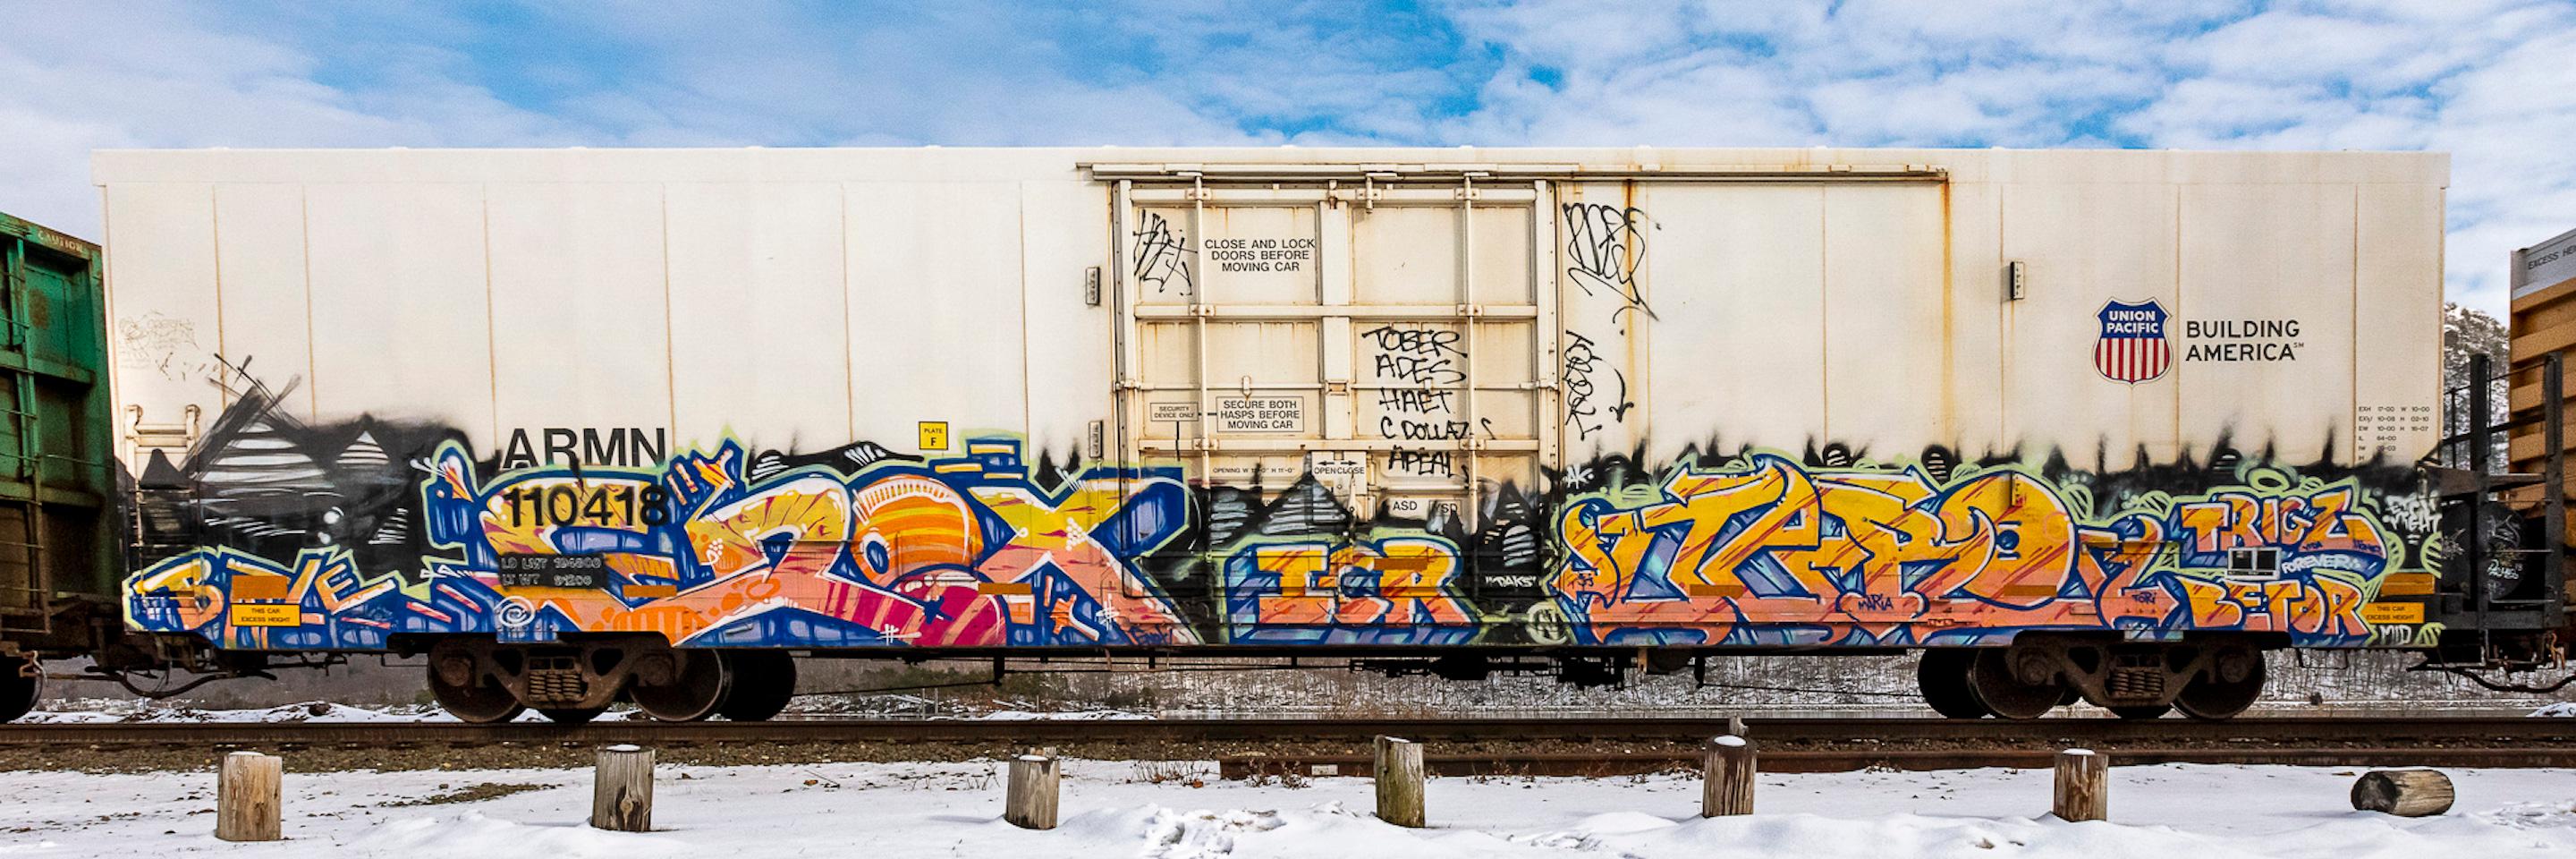 Stephen Mallon Color Photograph - "Armn 110418" Graffiti painted railroad train car, limited edition photograph